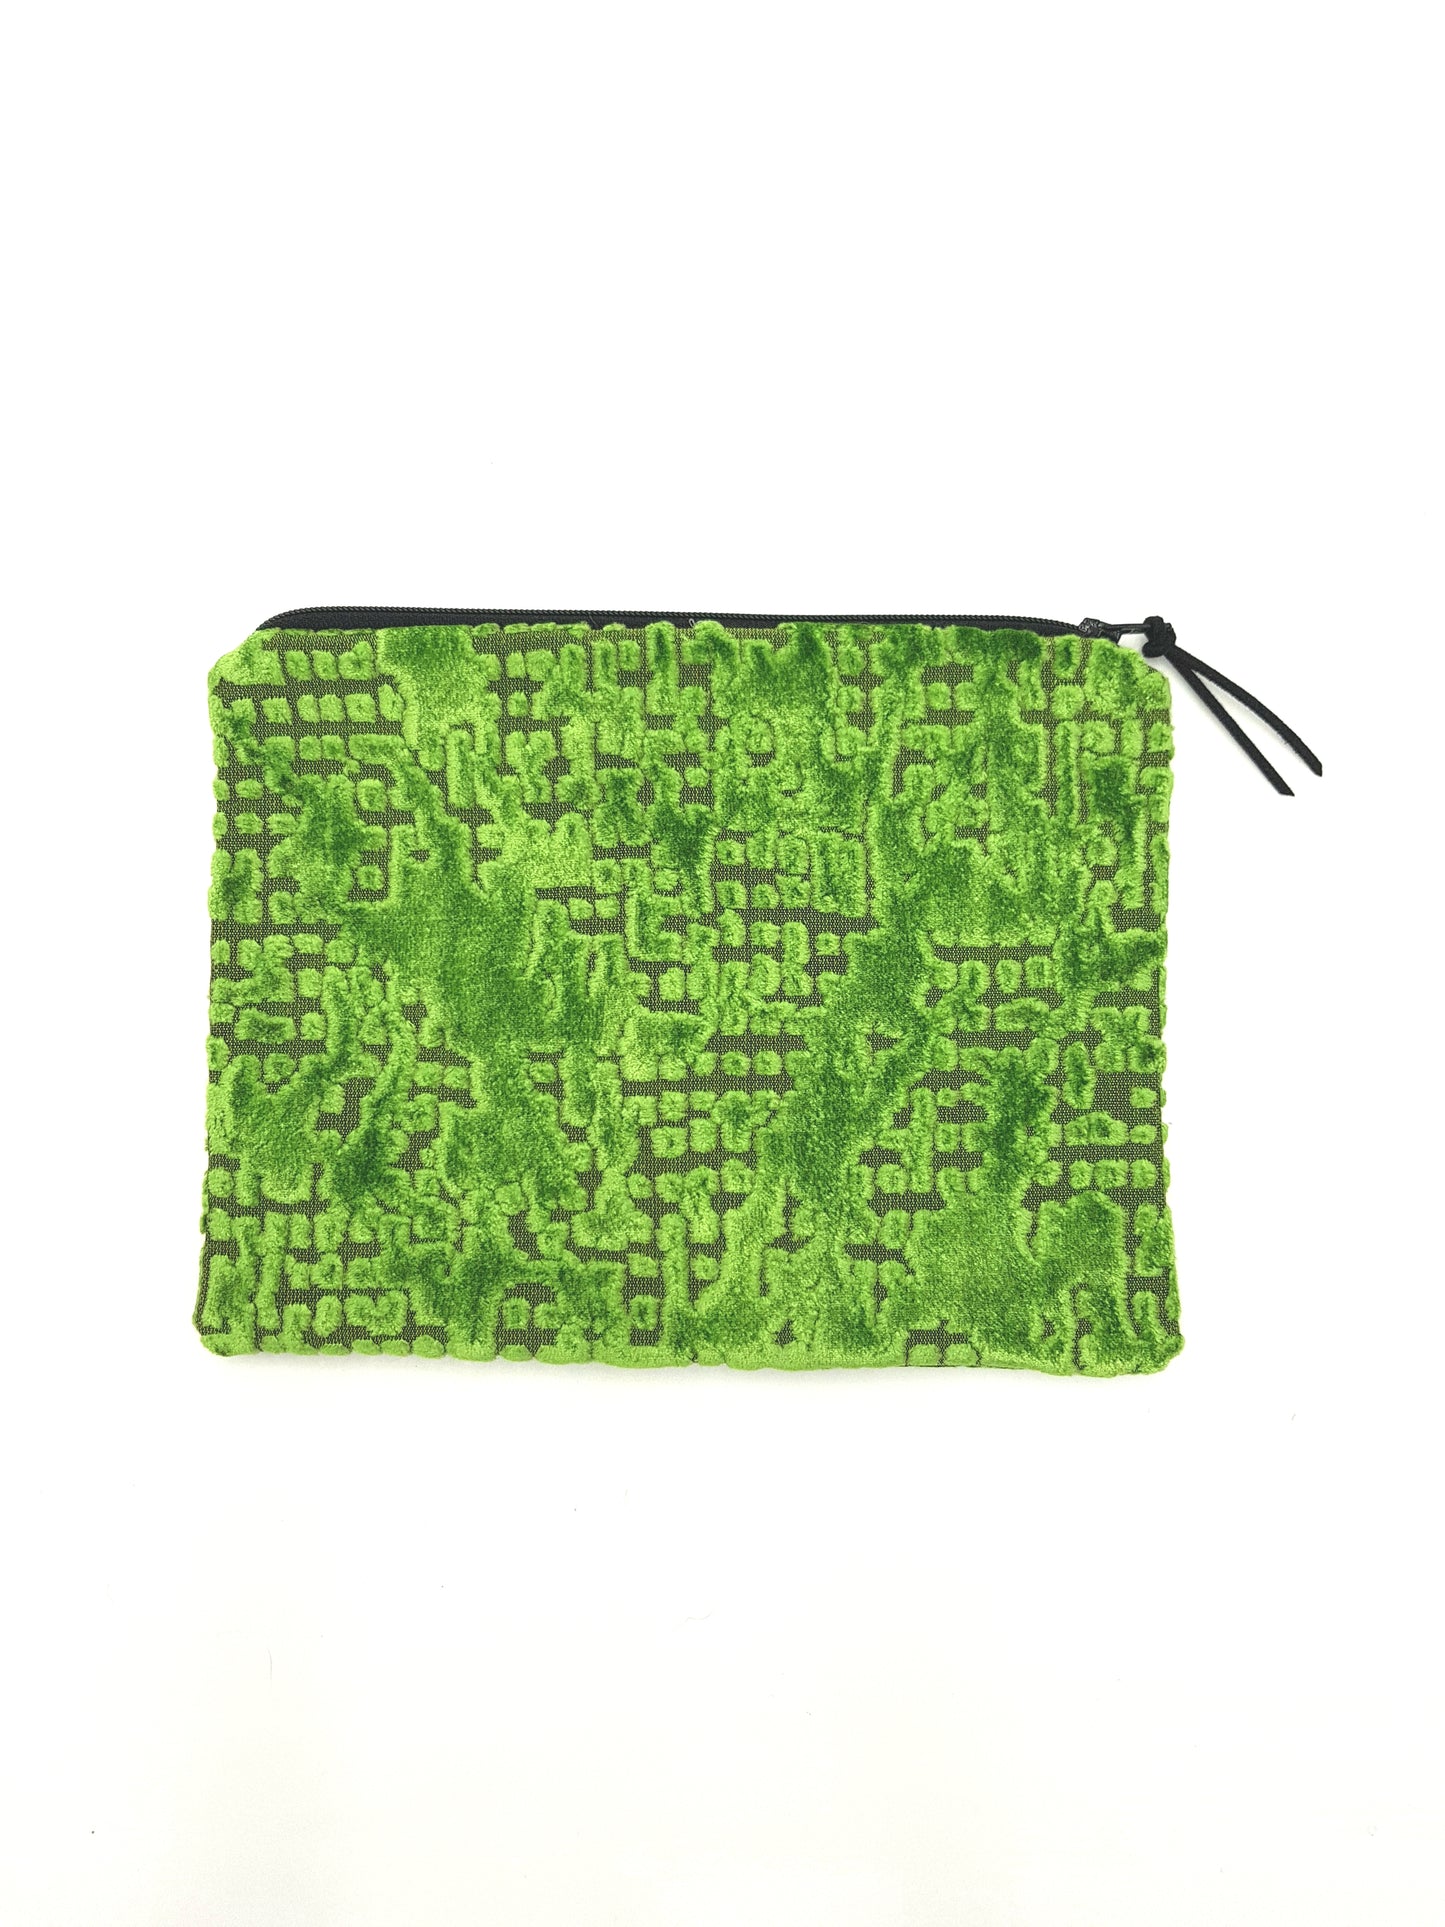 Alice jai   Accessory Bag    Vivid Green   Medium